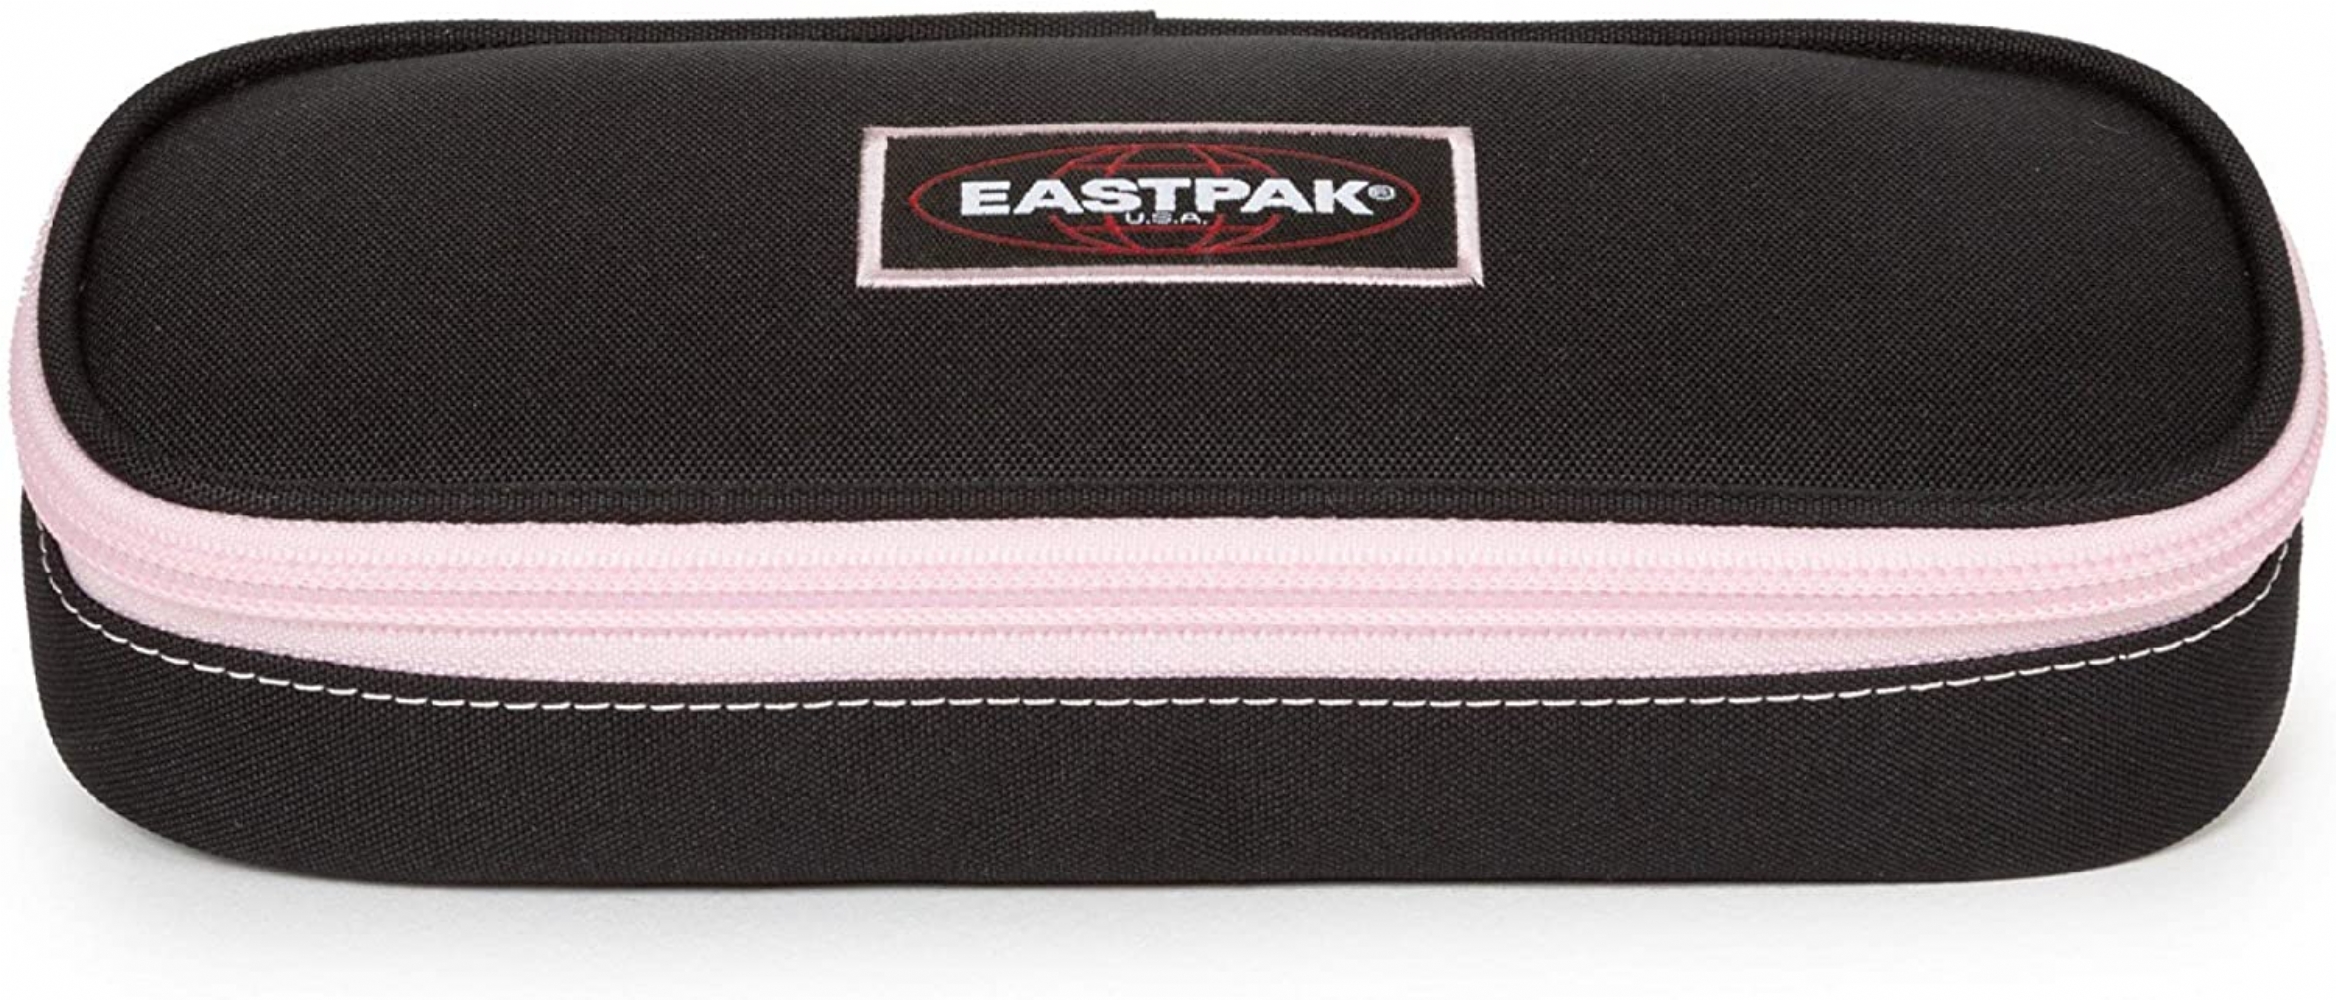 Eastpak - Astuccio Oval Single I85 - Kontrast - Colore Nero Rosa